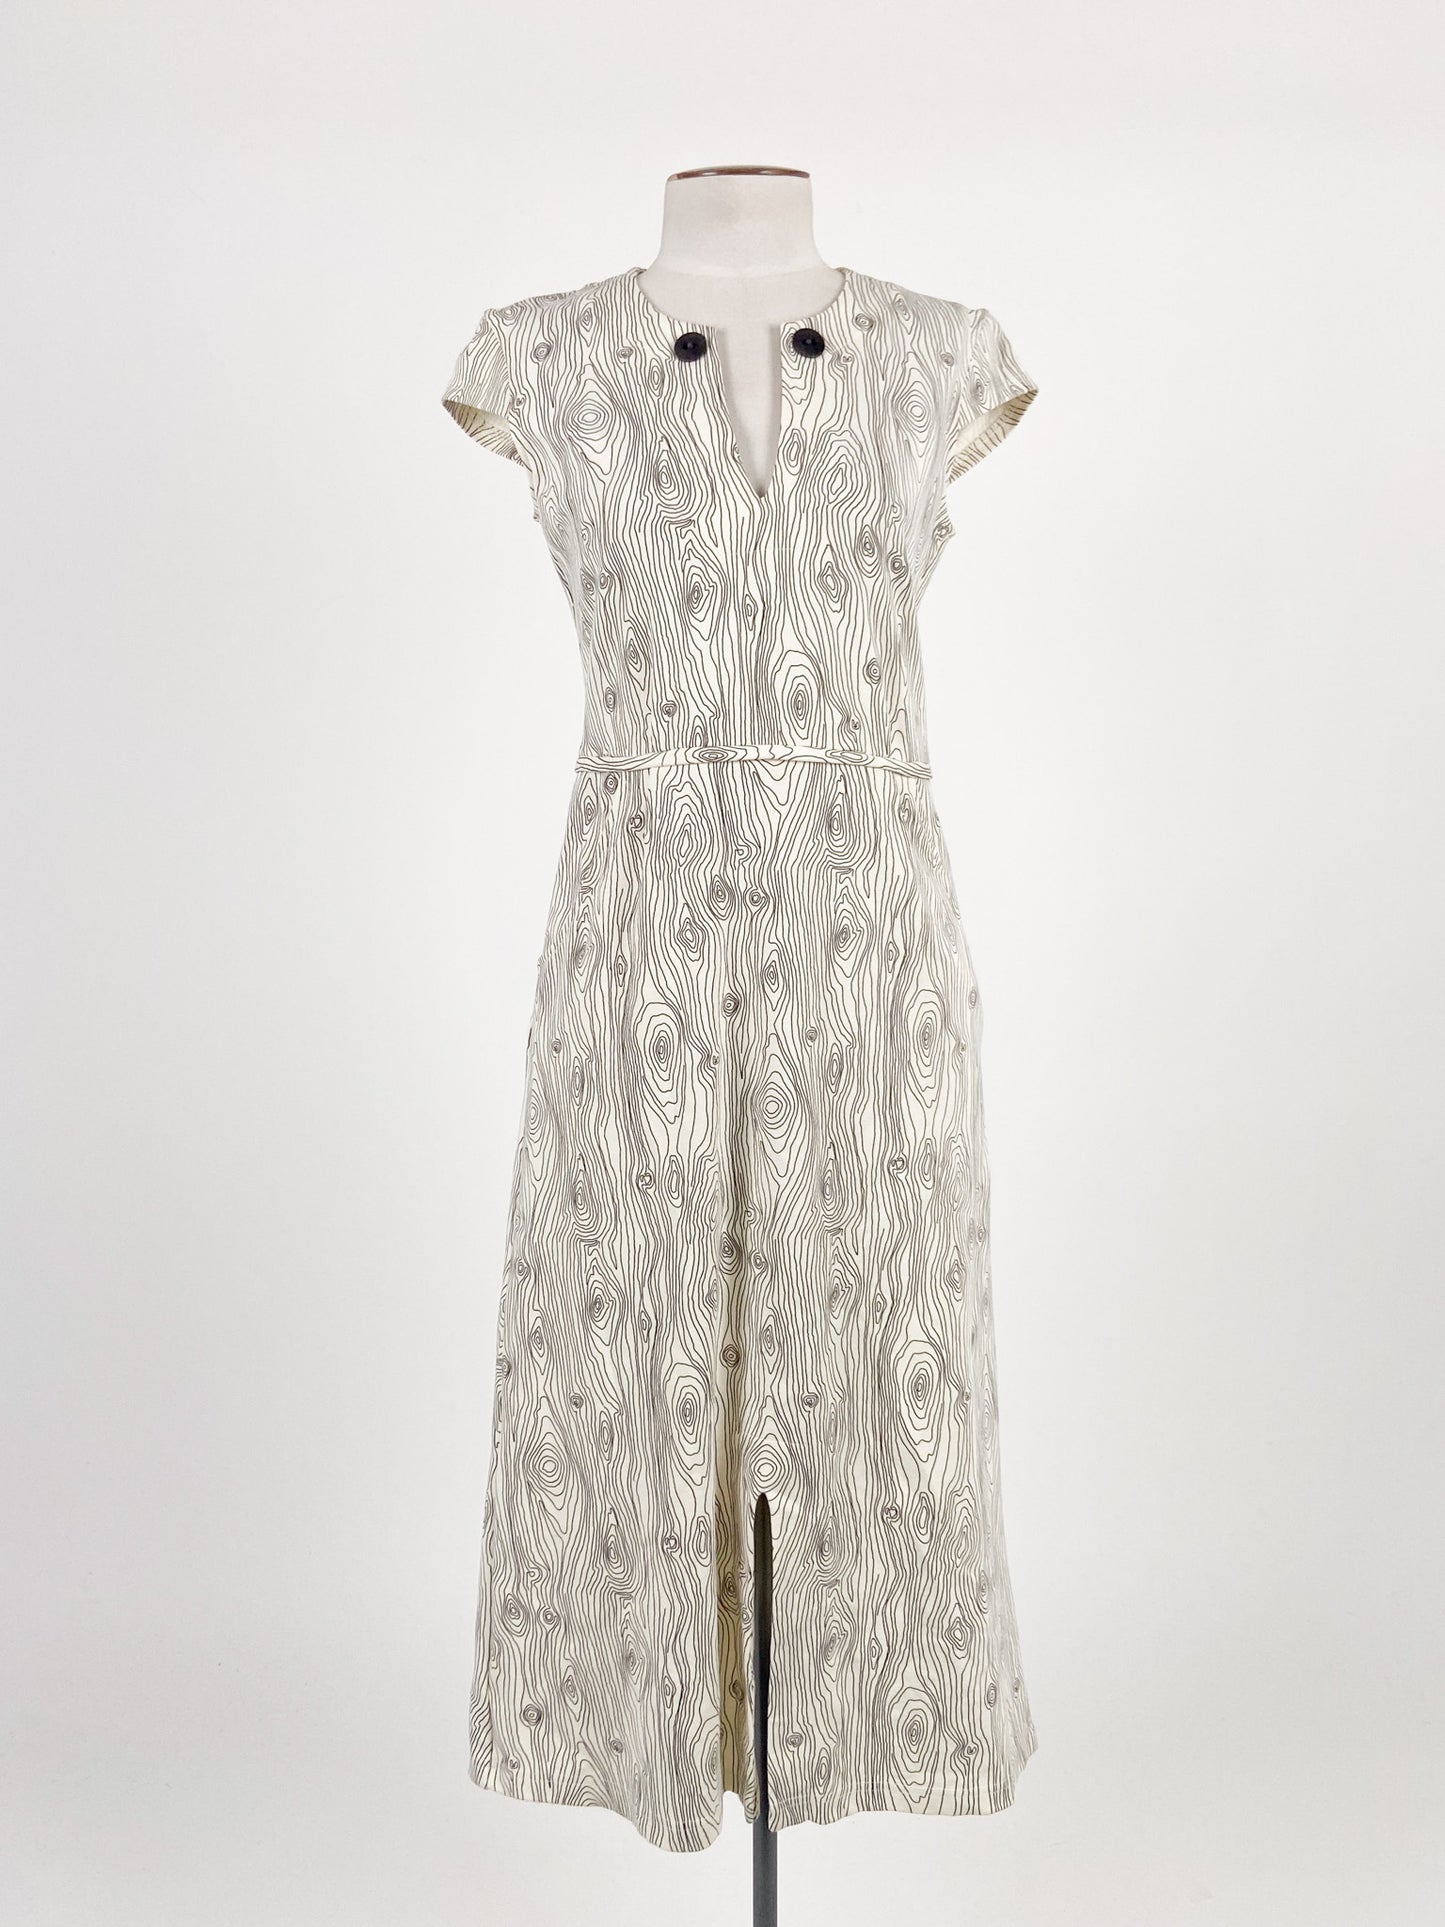 Kate Sylvester | White Workwear Dress | Size S